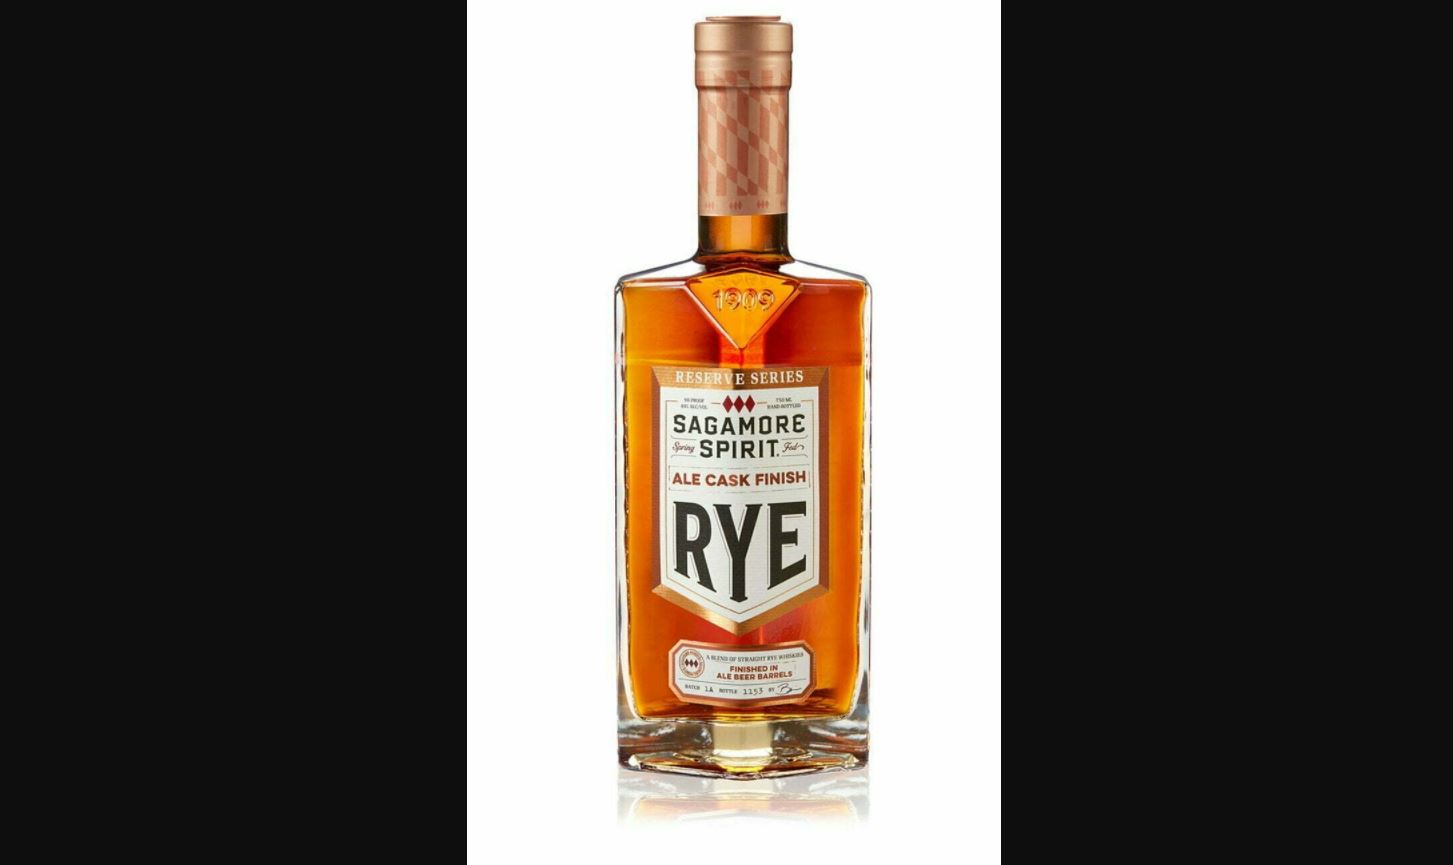 Sagamore Spirit Rye Ale Cask Finish